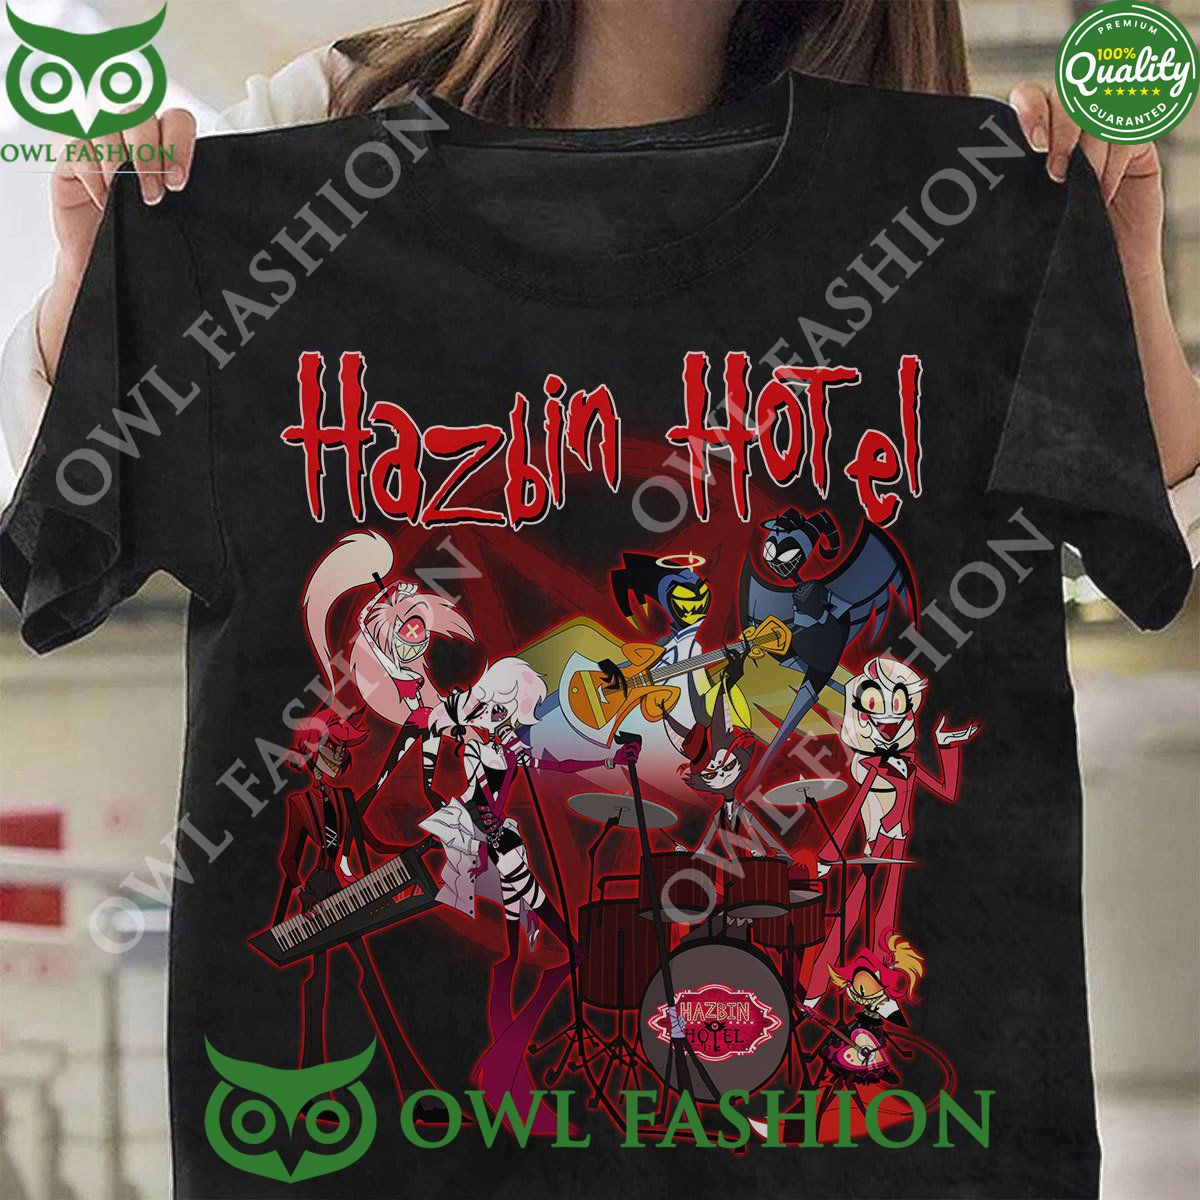 hazbin hotel drama characters music band 2d t shirt 1 kqr8g.jpg